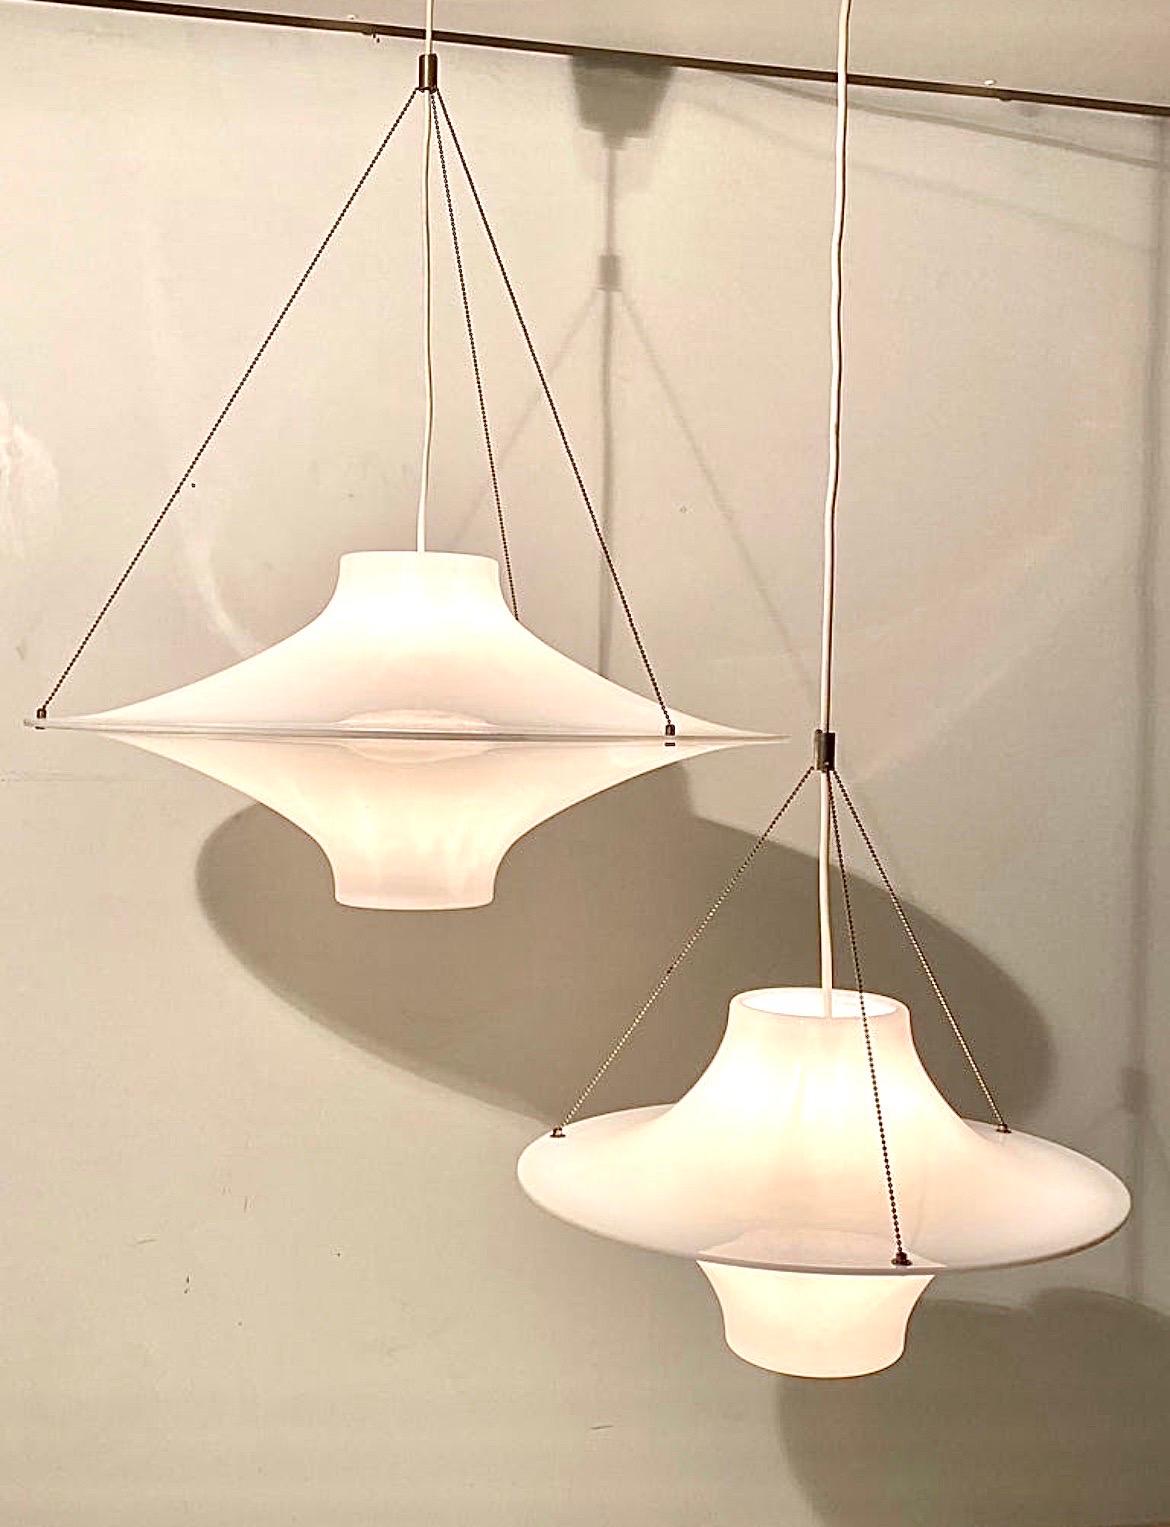 Finnish Sky Flyer Pendant Lamp by Yki Nummi